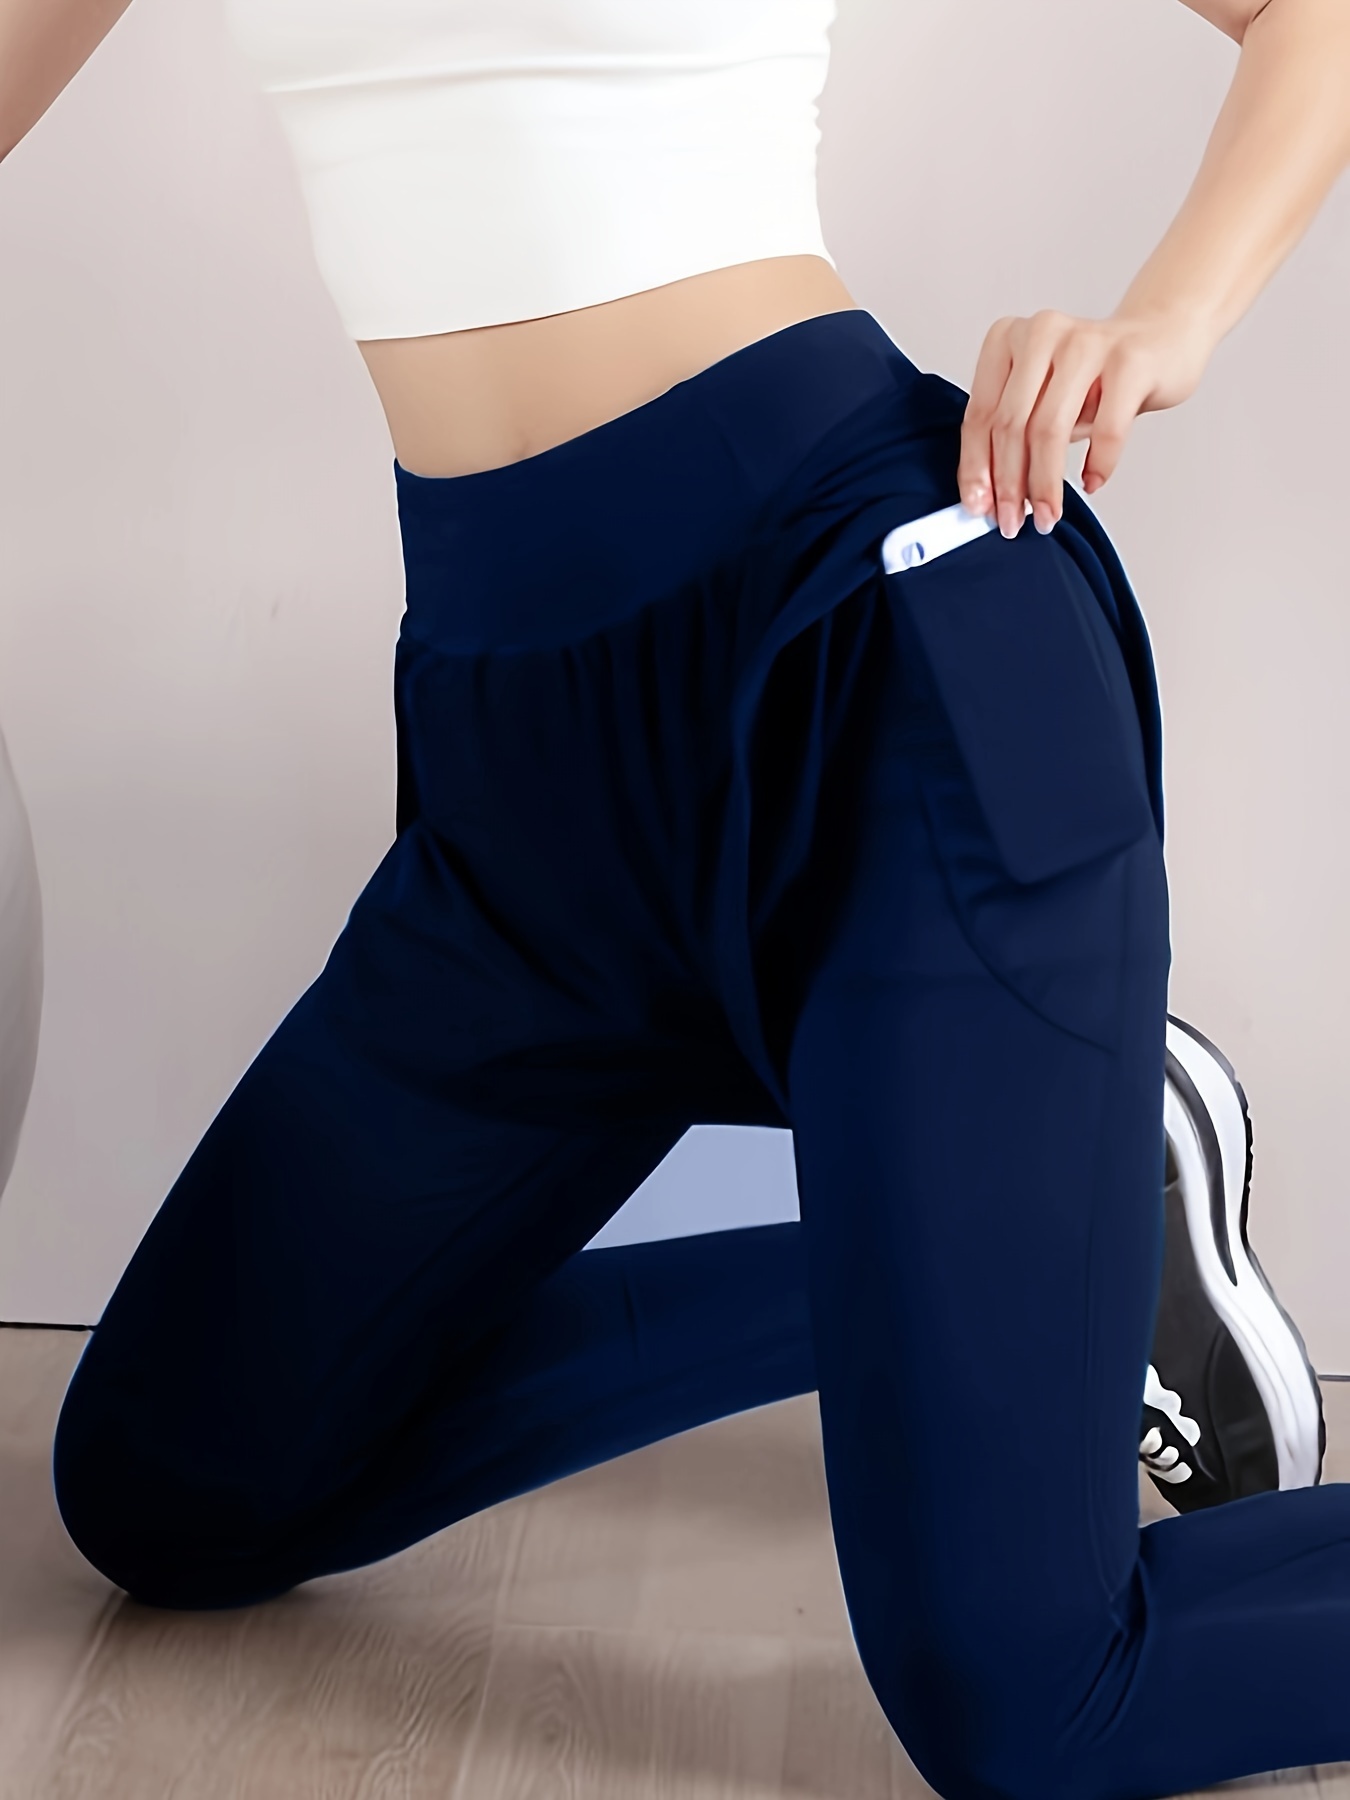 Silk Yoga Pants for Women High Waist Tummy Control Compression